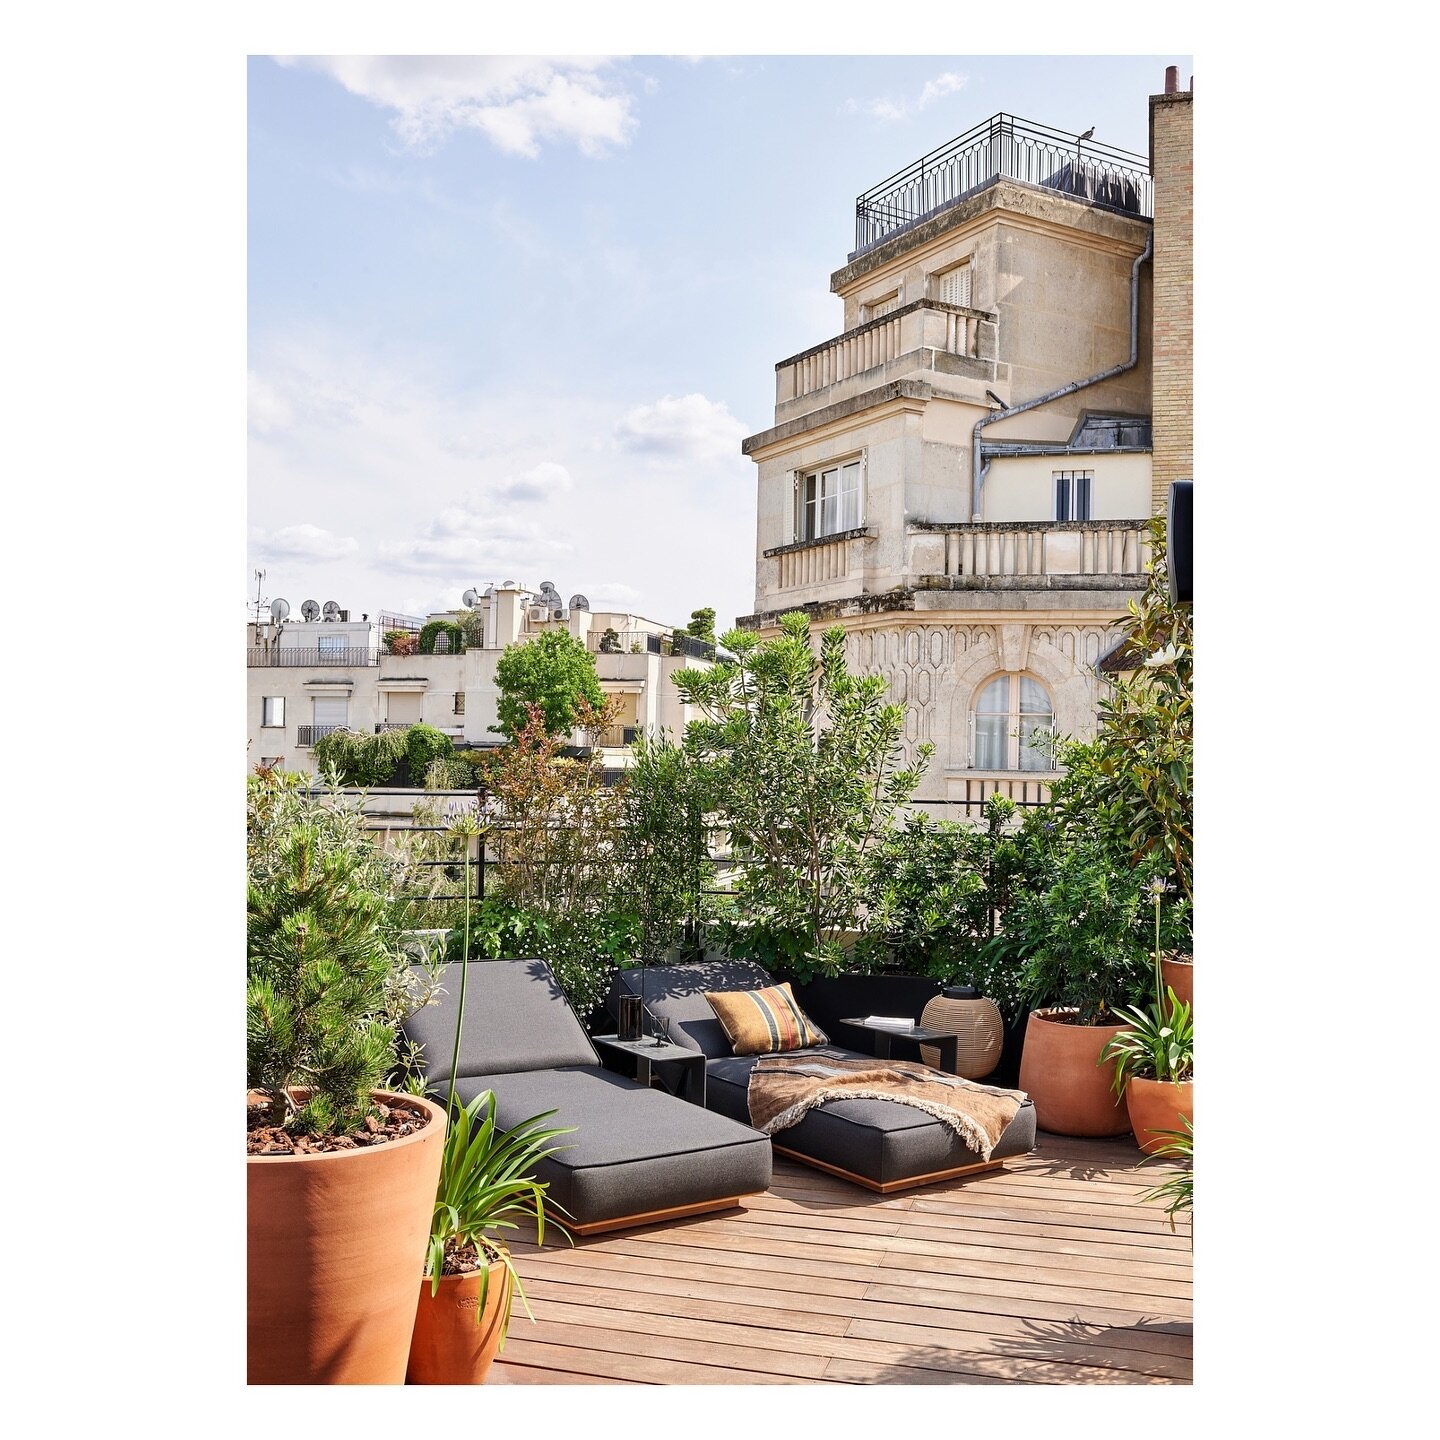 Stunning rooftop in the Paris suburbs shot by DIDIER DELMAS for the latest issue @ideat_magazine @didierdelmasphotographe
*
Styliste @duboscqvirginie
*
#editorialphotoshoot #ideat #deco #interiorphotographer #designphotography #architecturedinterieur